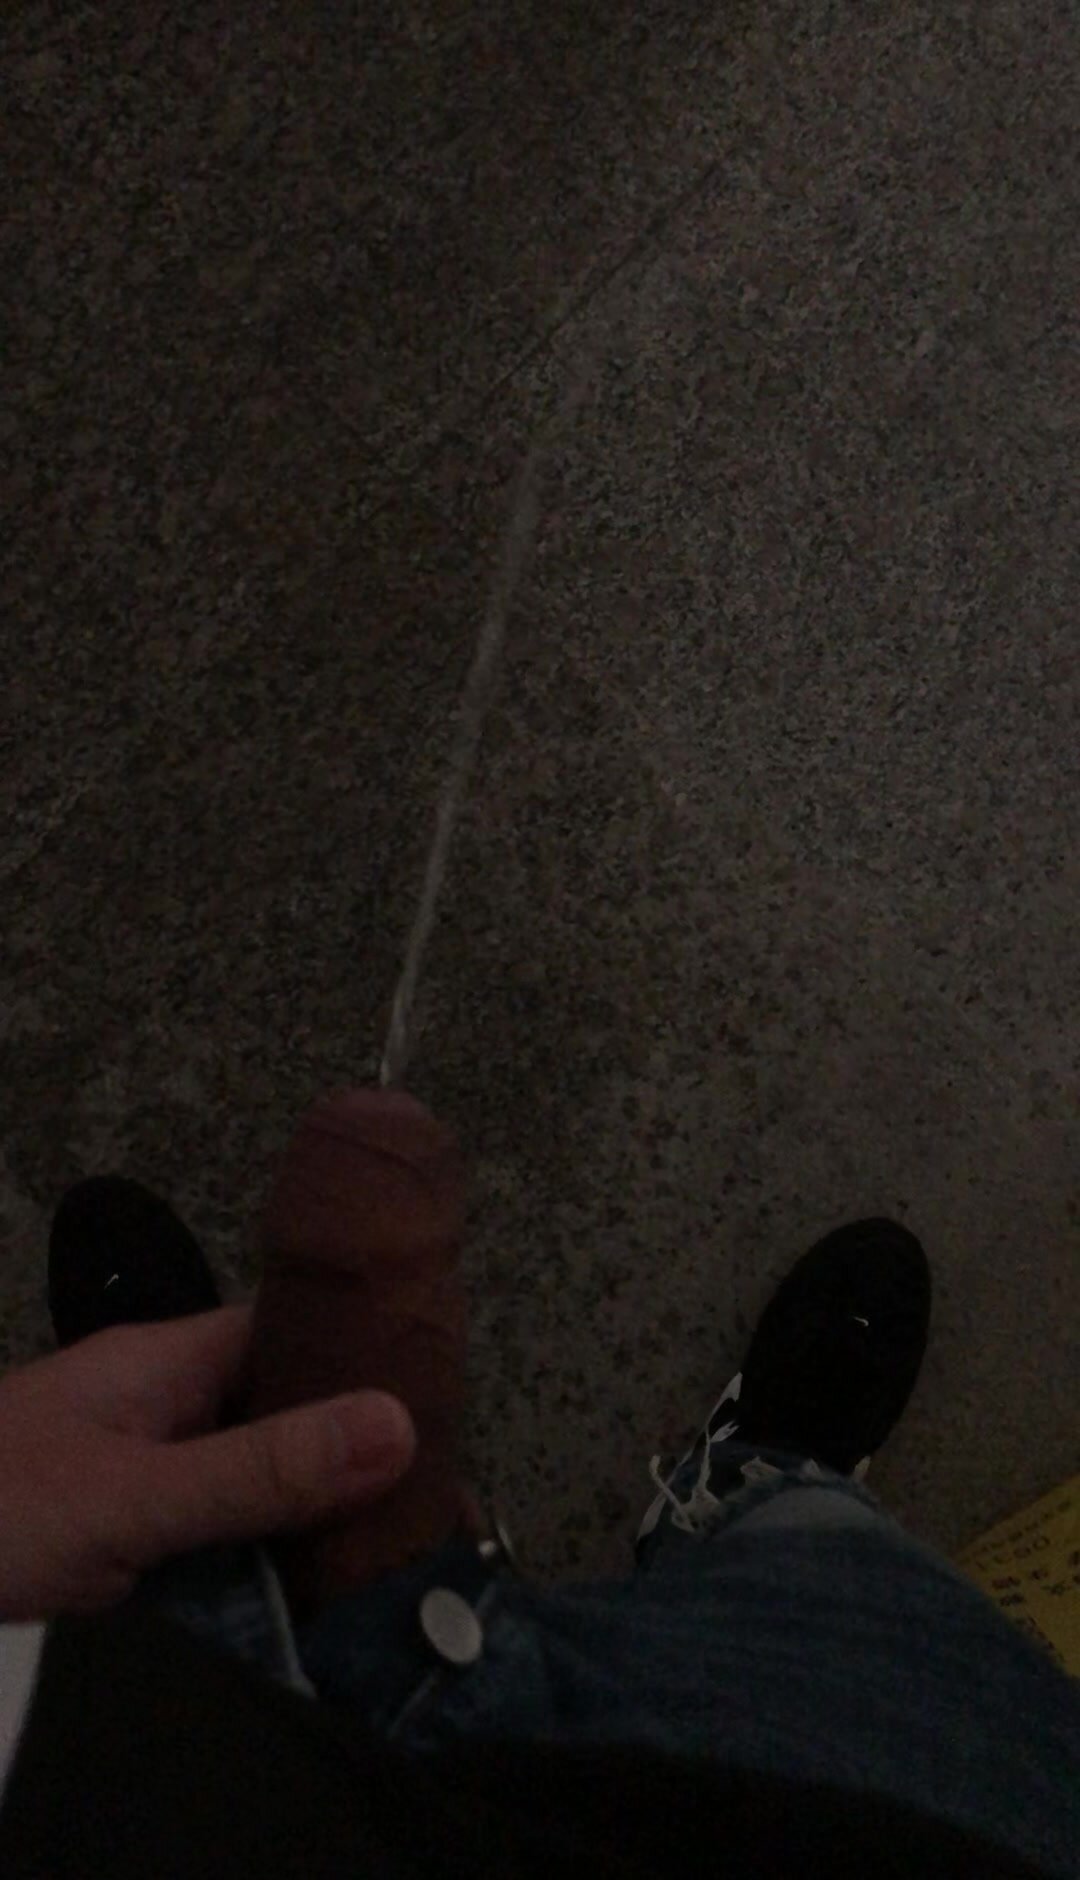 Me pissing in a school hallway